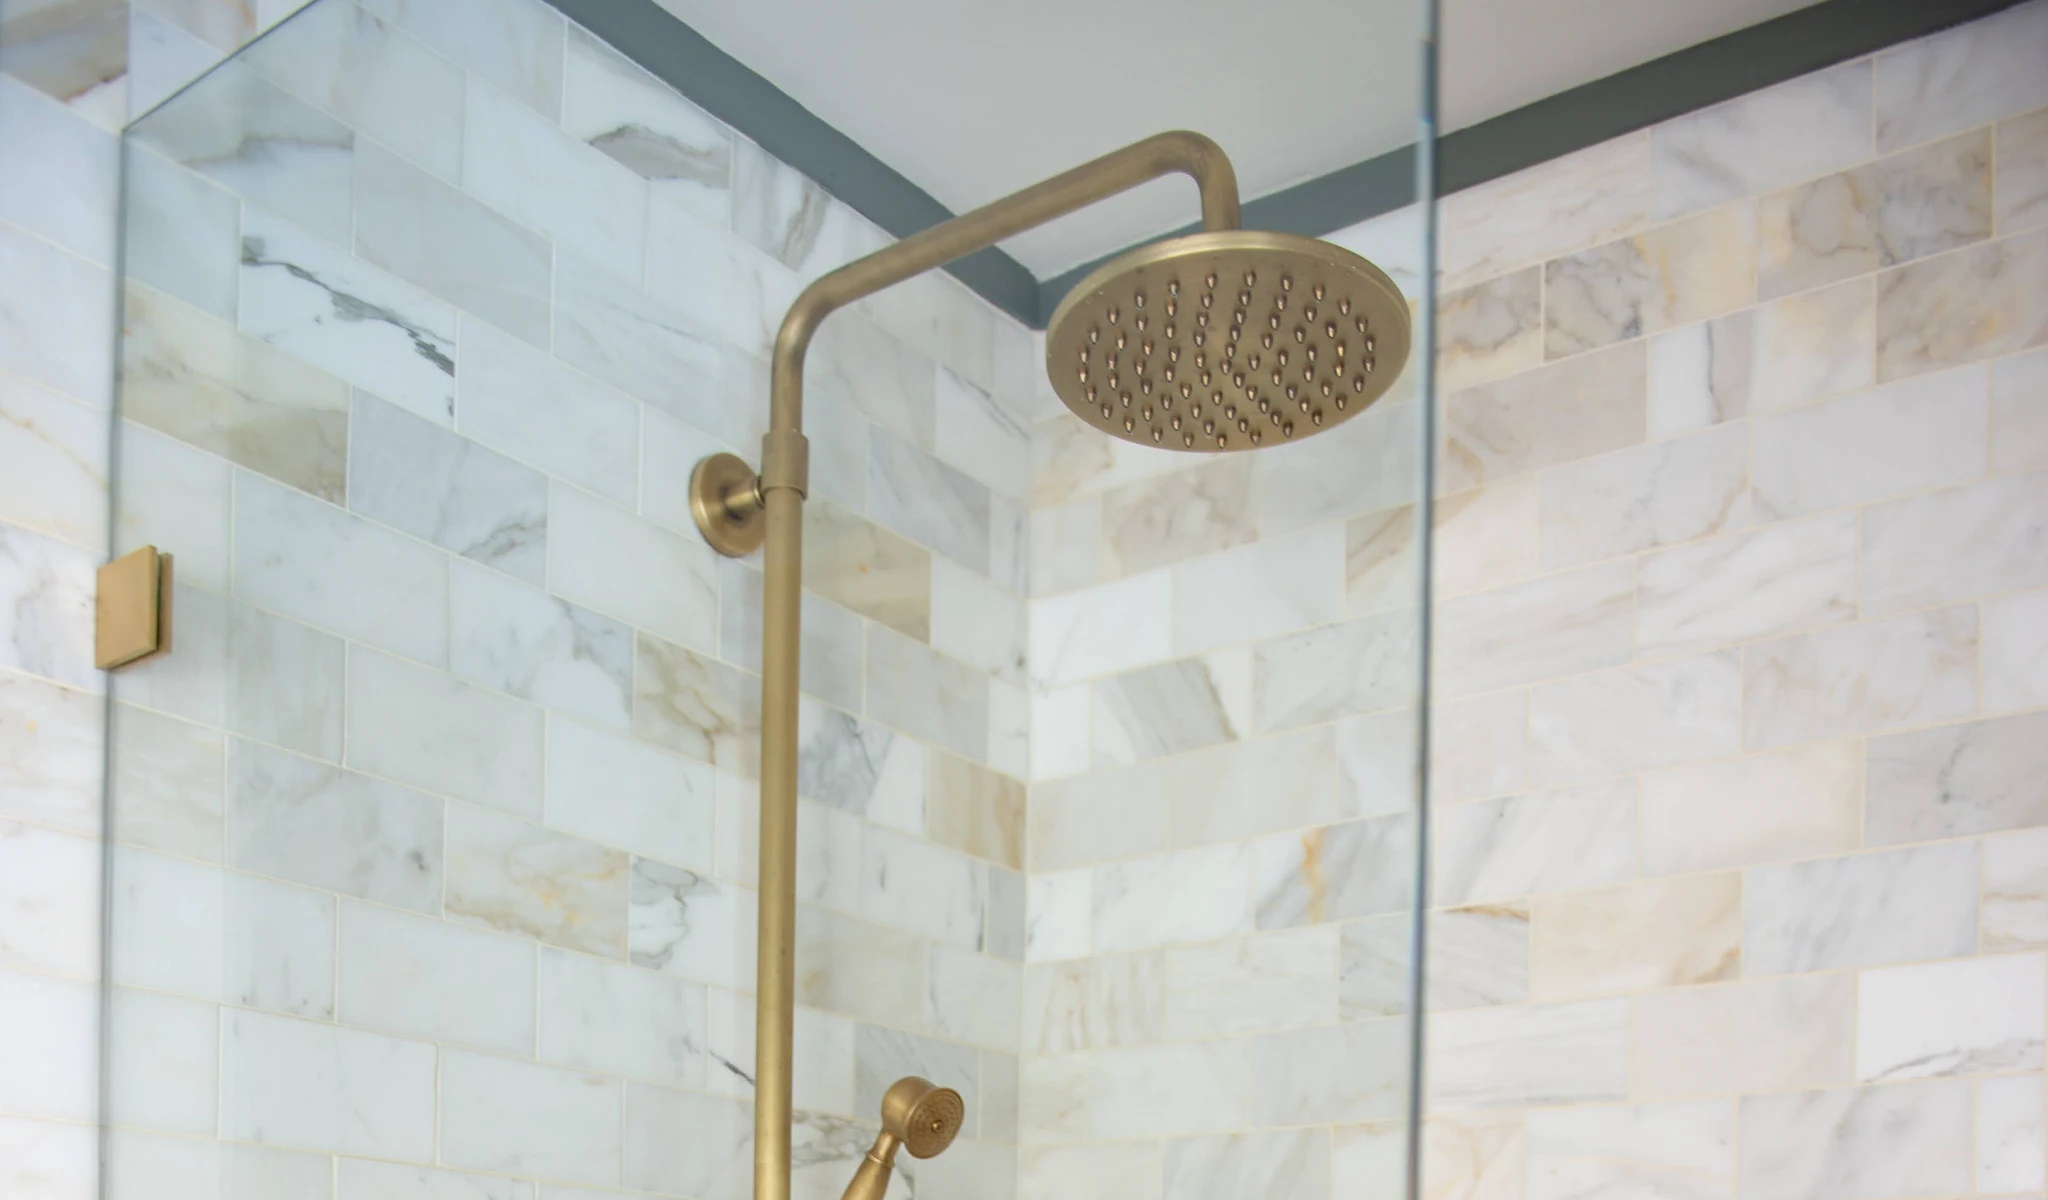 A shower with a brass shower head.